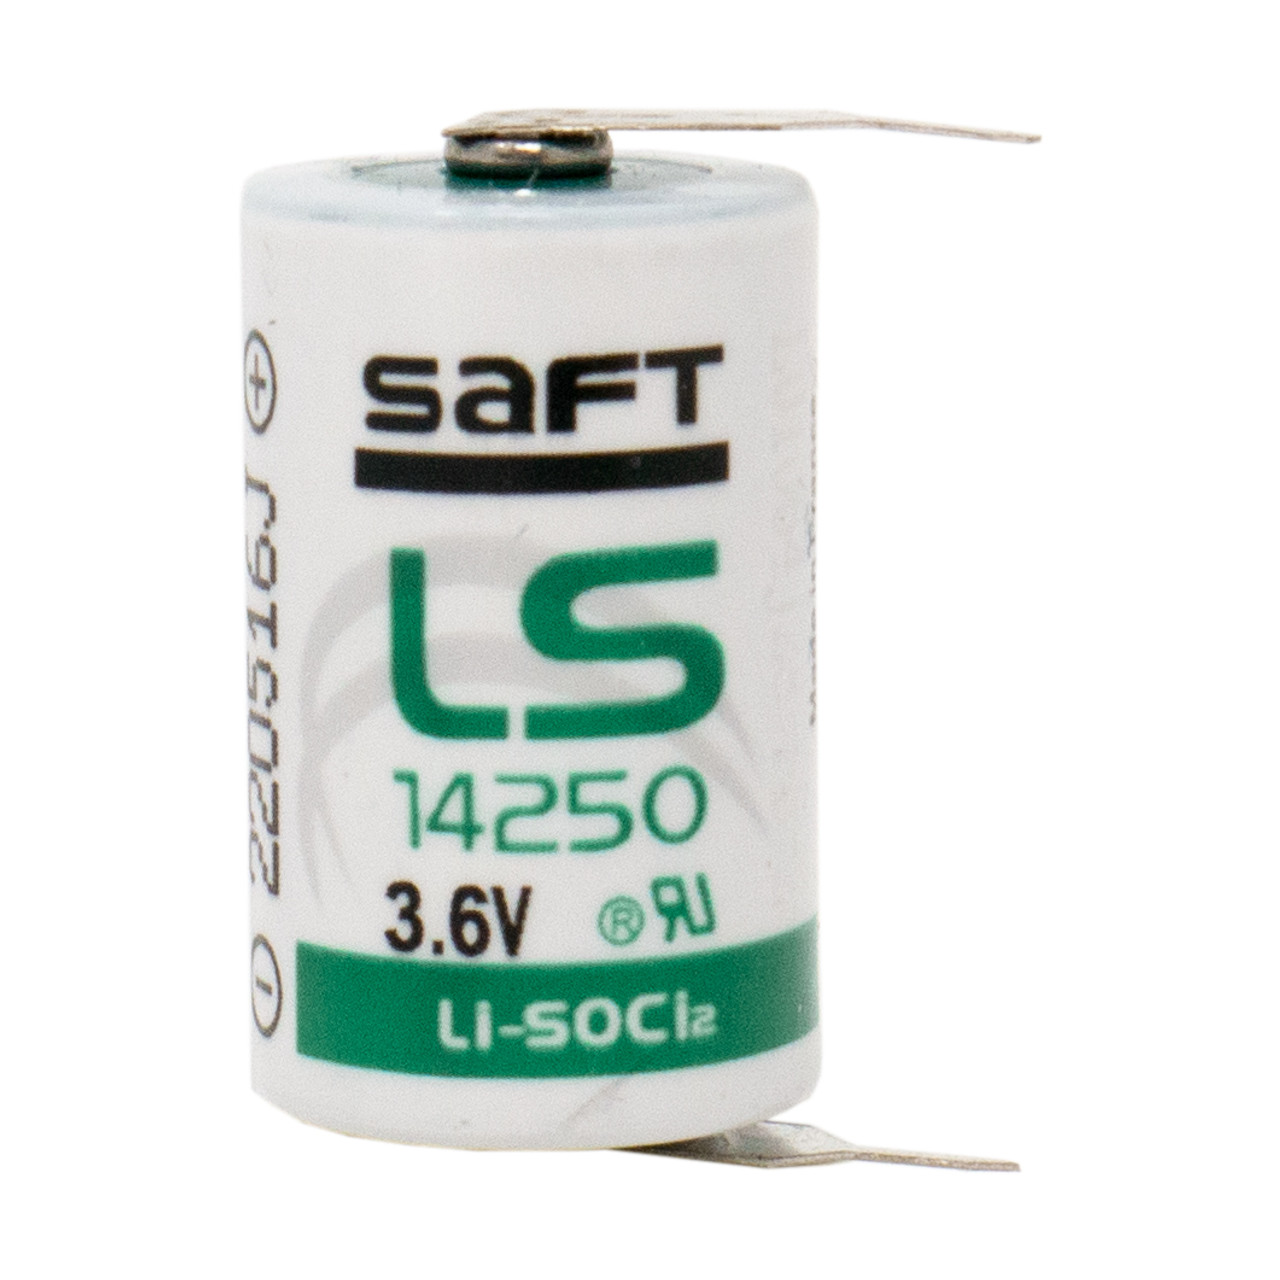 Li-Socl2 Battery Er14250 Ls14250 14250 1200mAh 3.6V Lithium